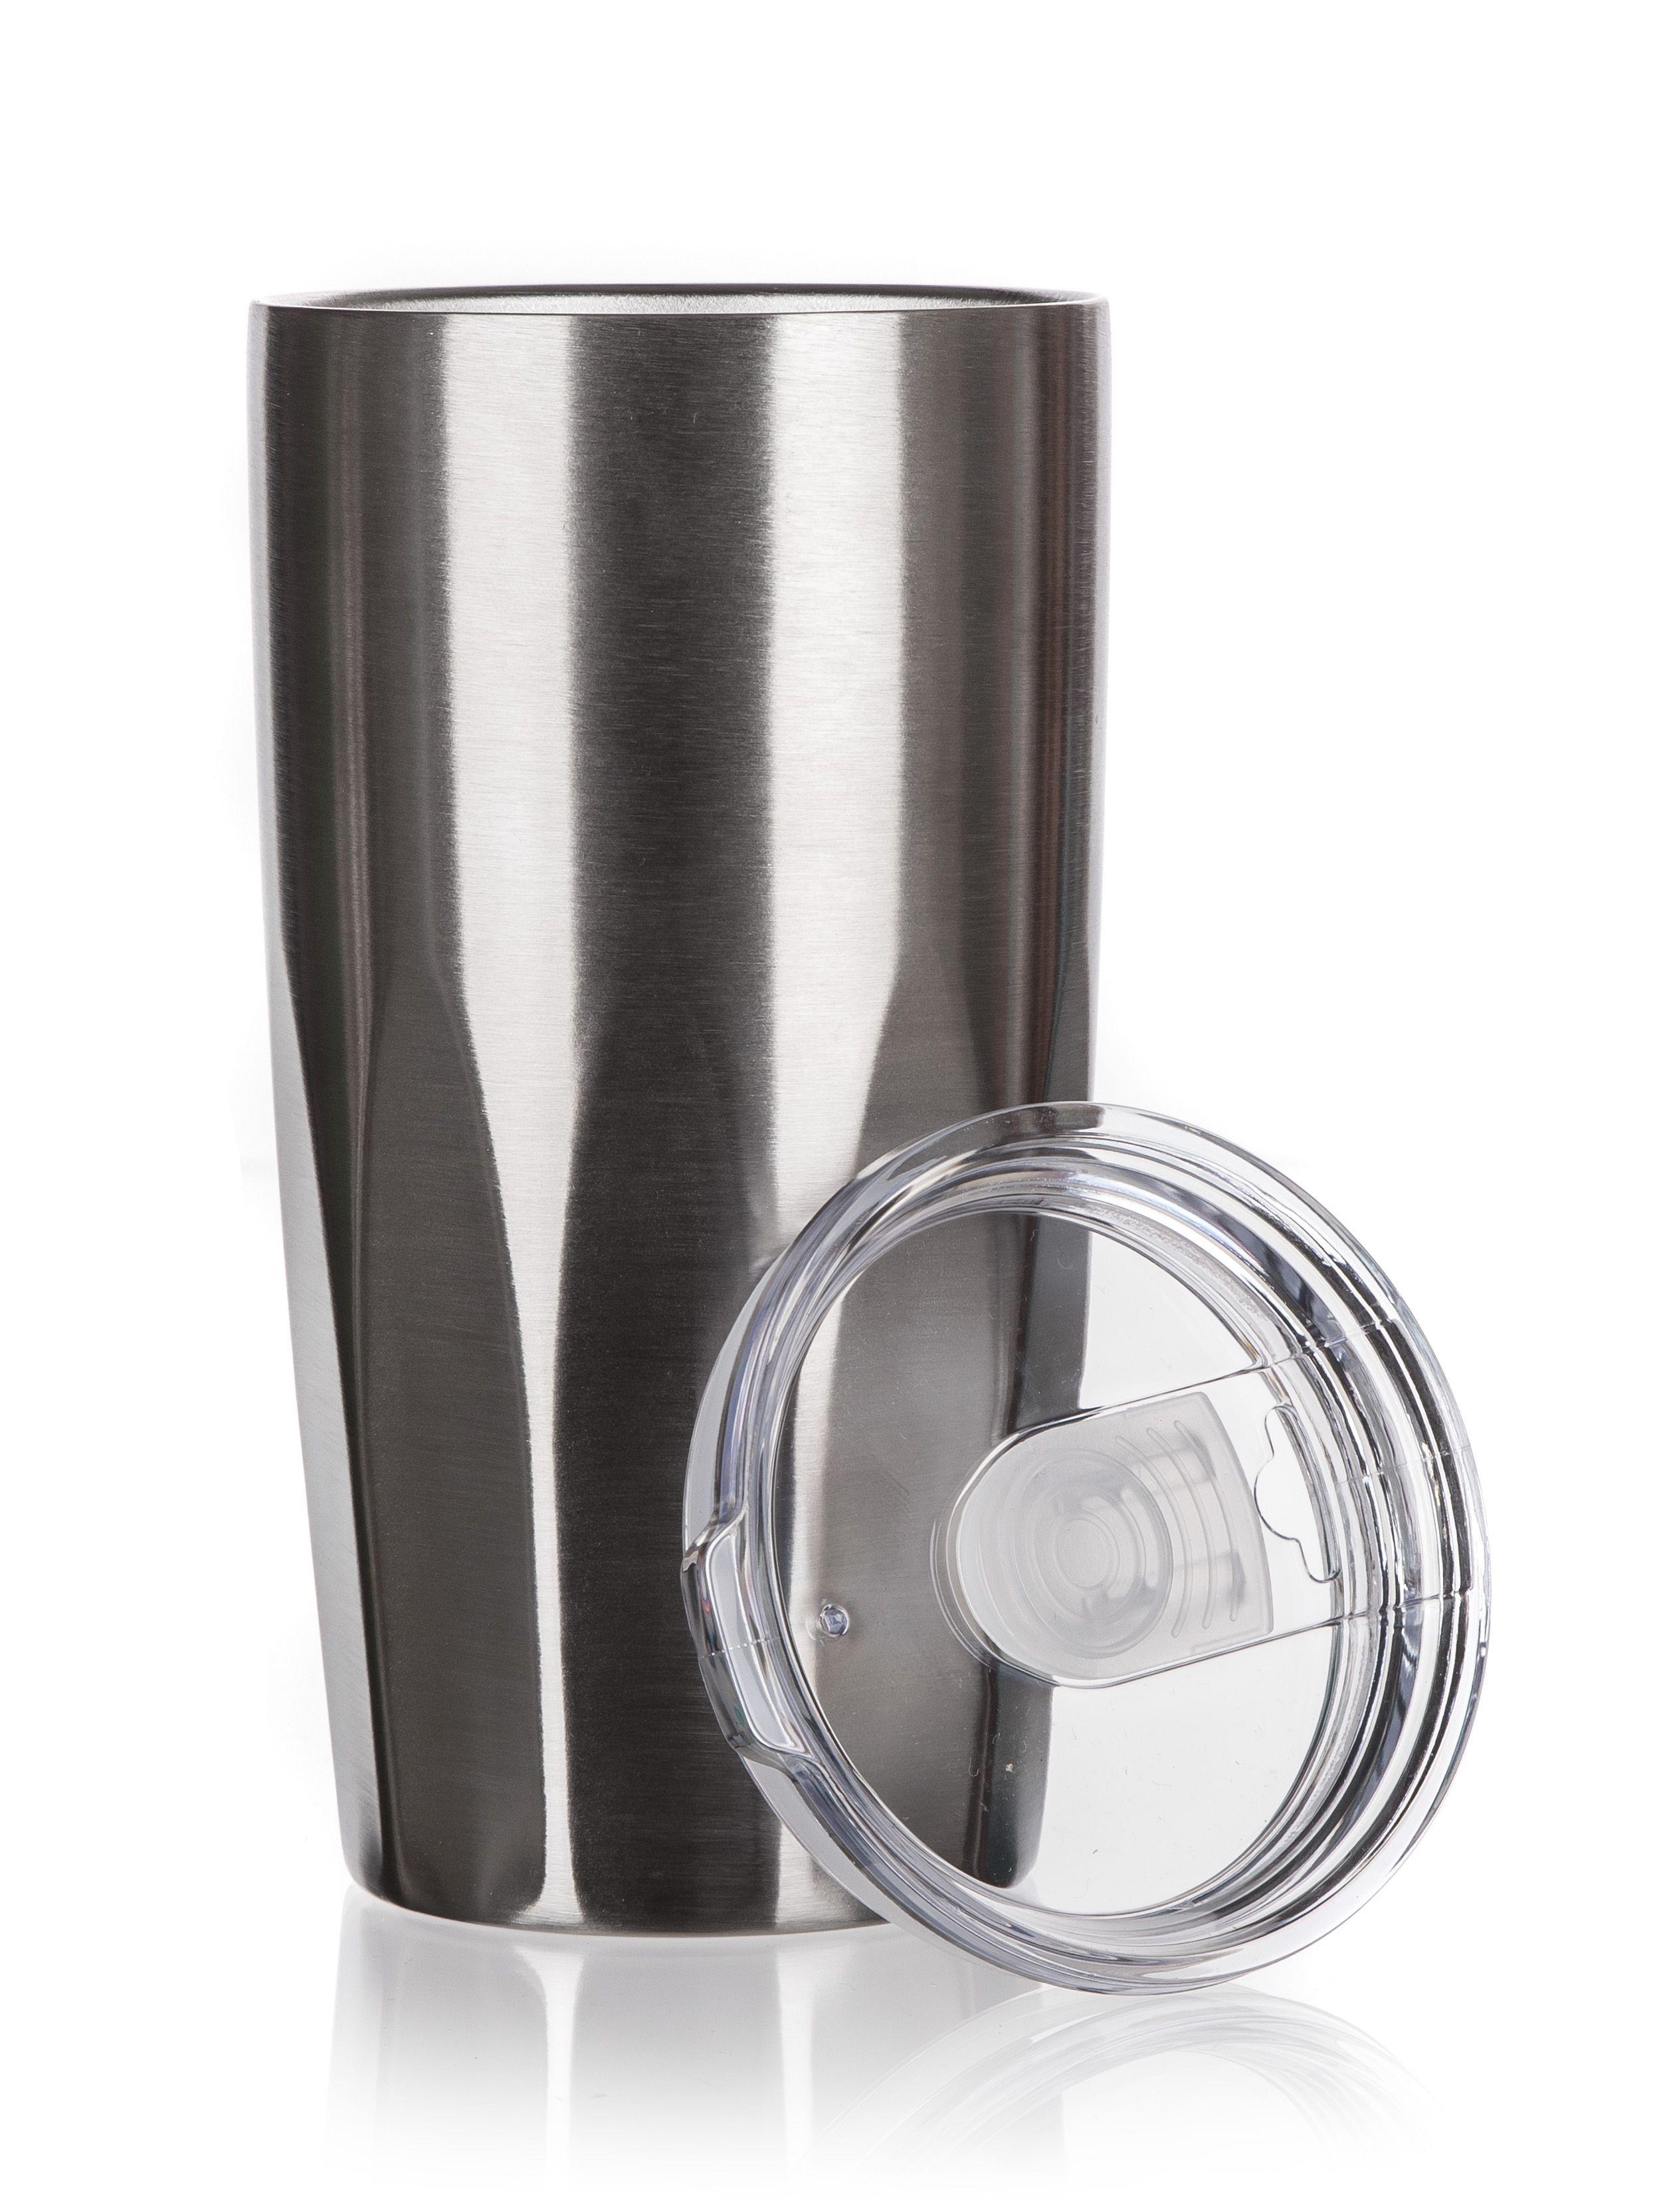 Double wall thermal mug RAZZO 500ml stainless steel